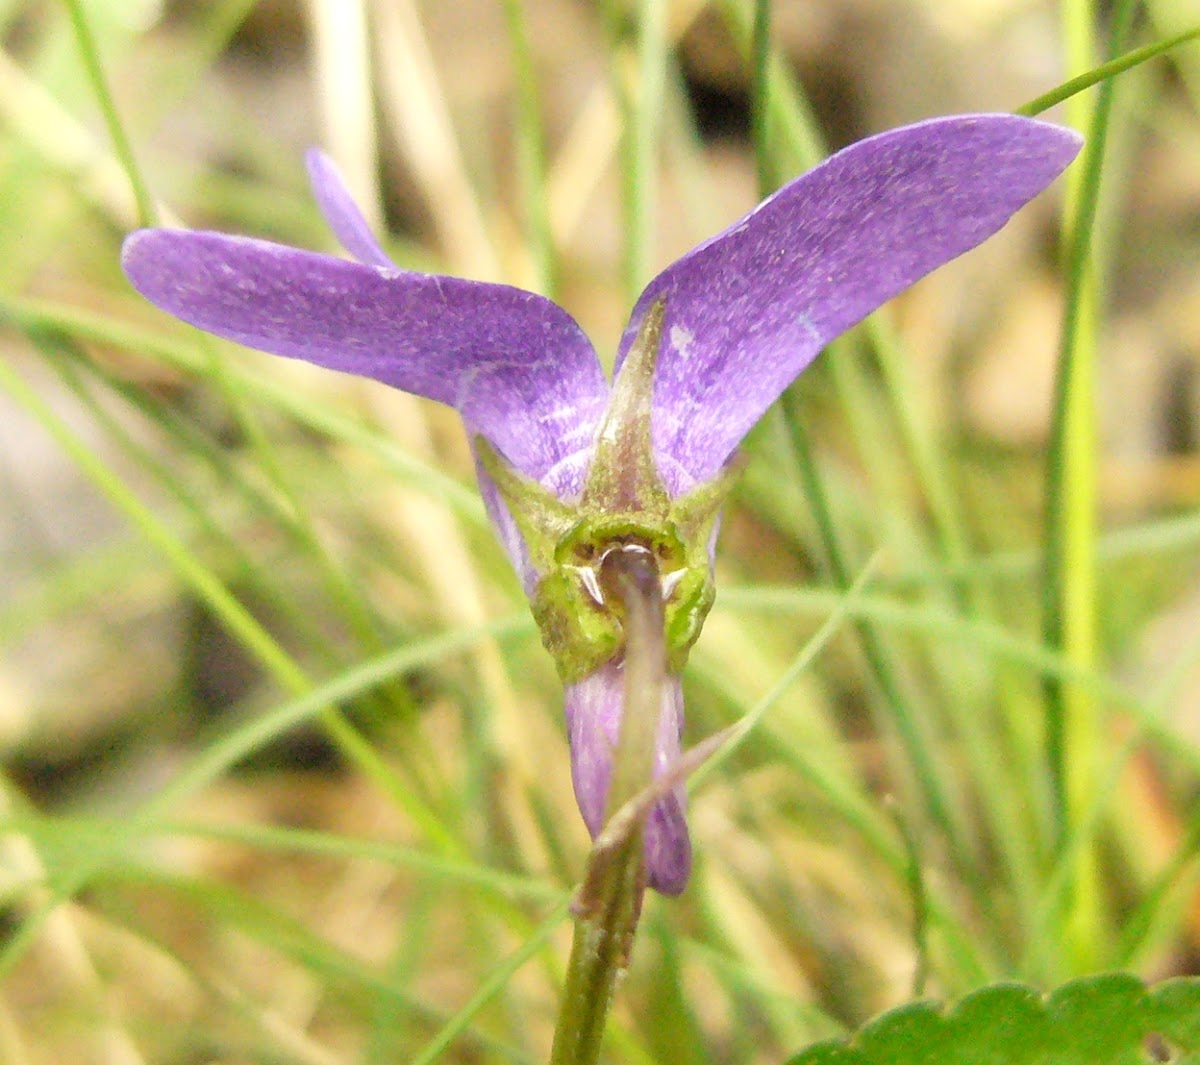 violeta común